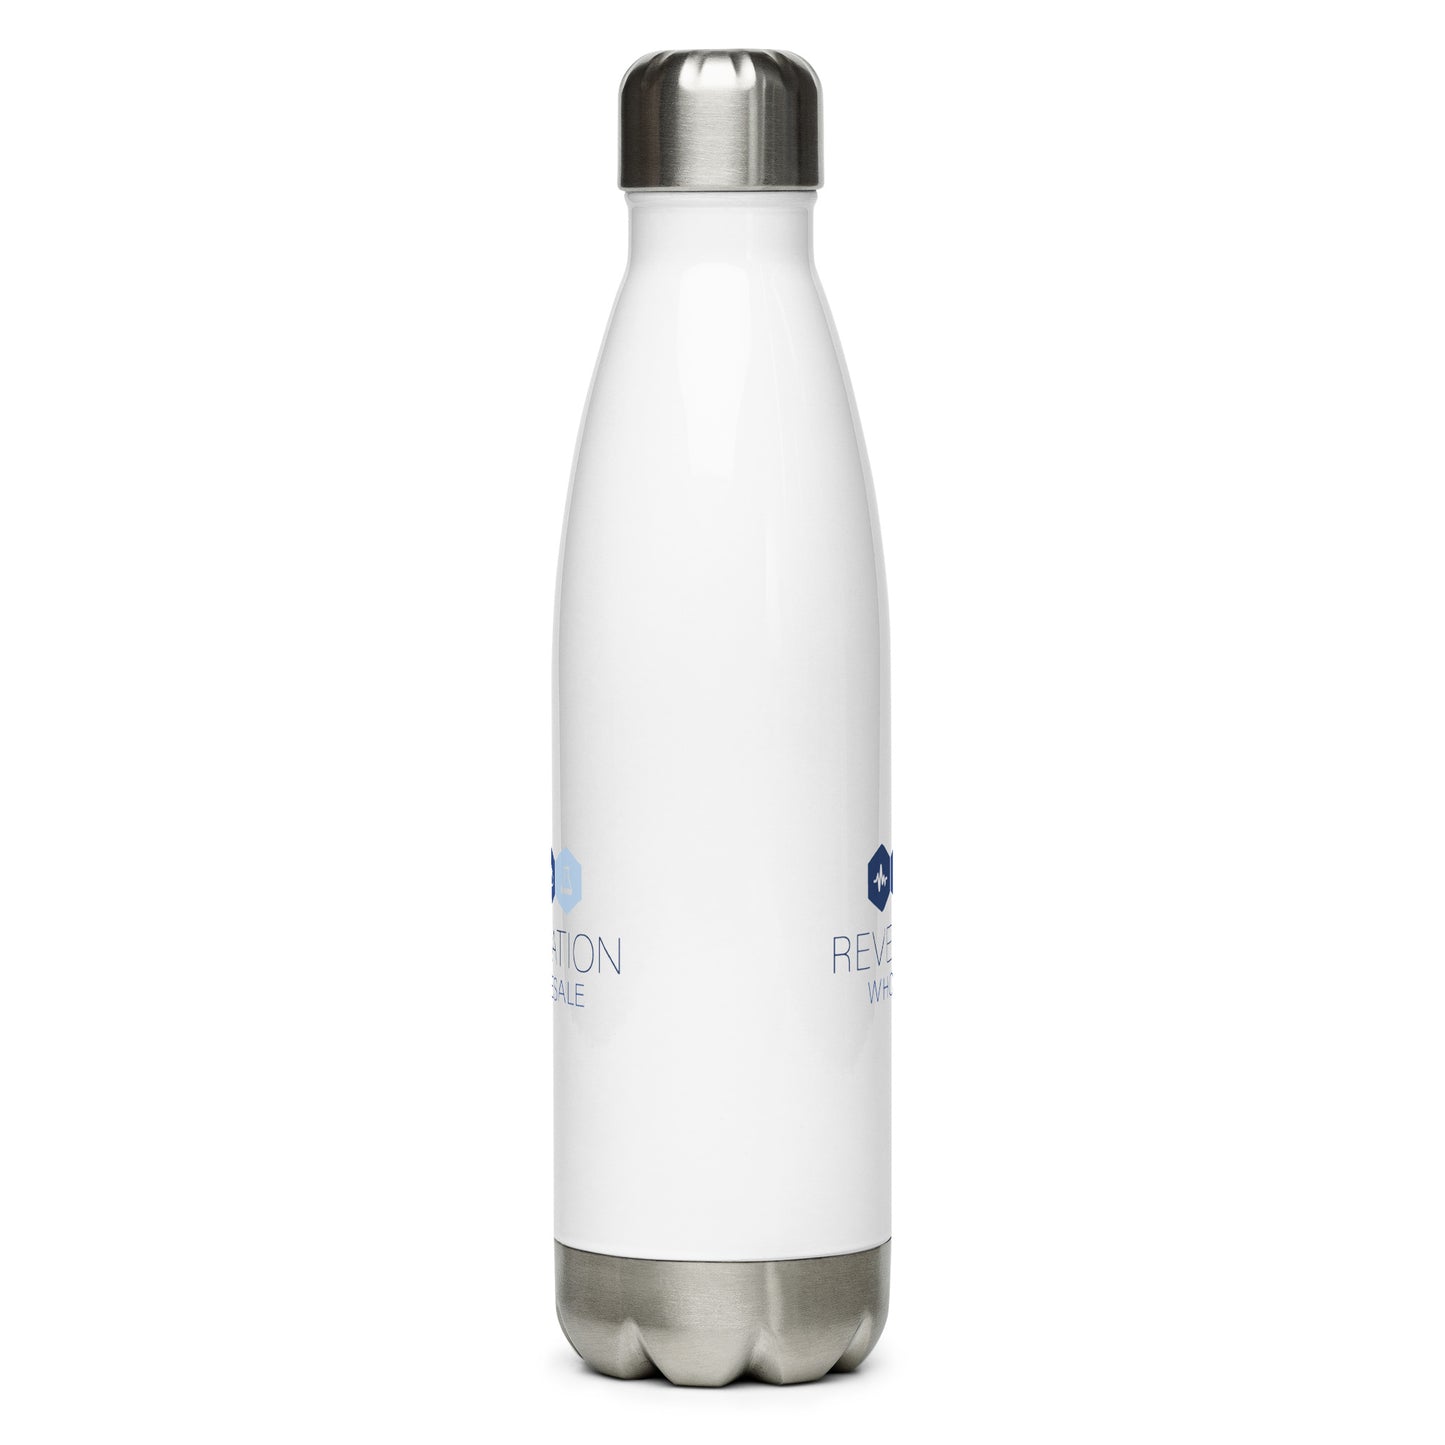 Stainless steel water bottle - Wholesale